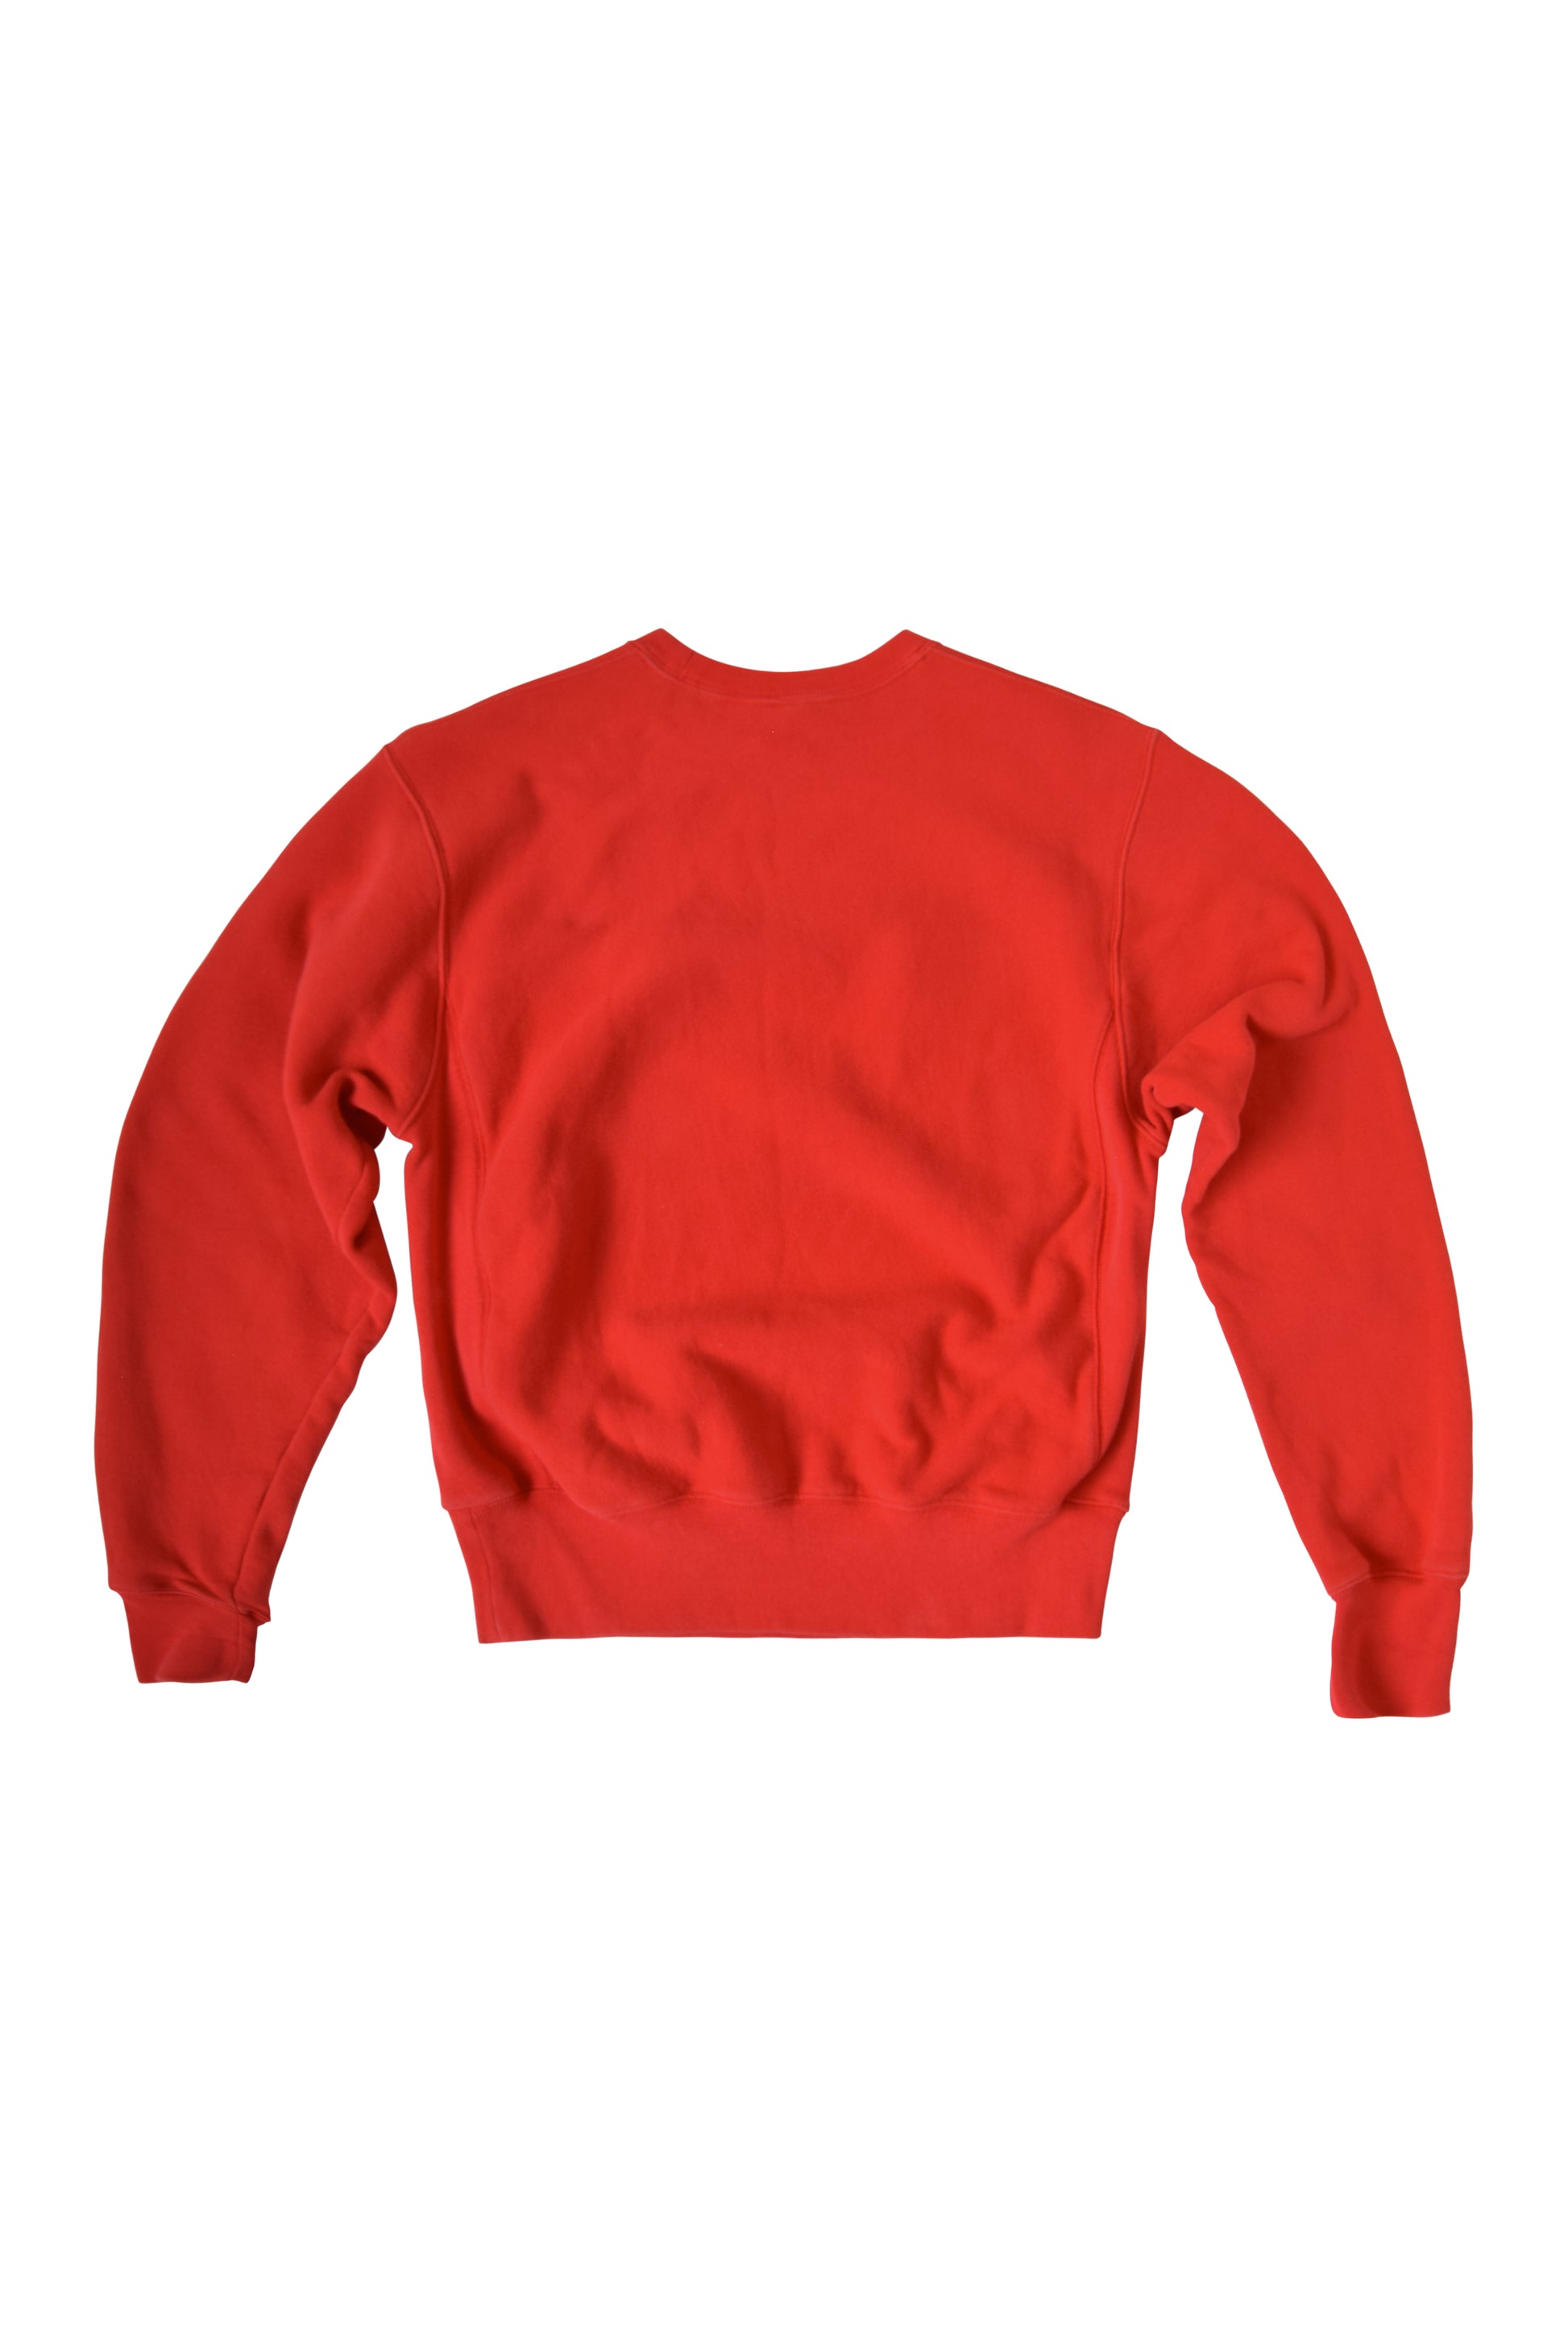 Vintage 90's Champion Sweatshirt Size S Red